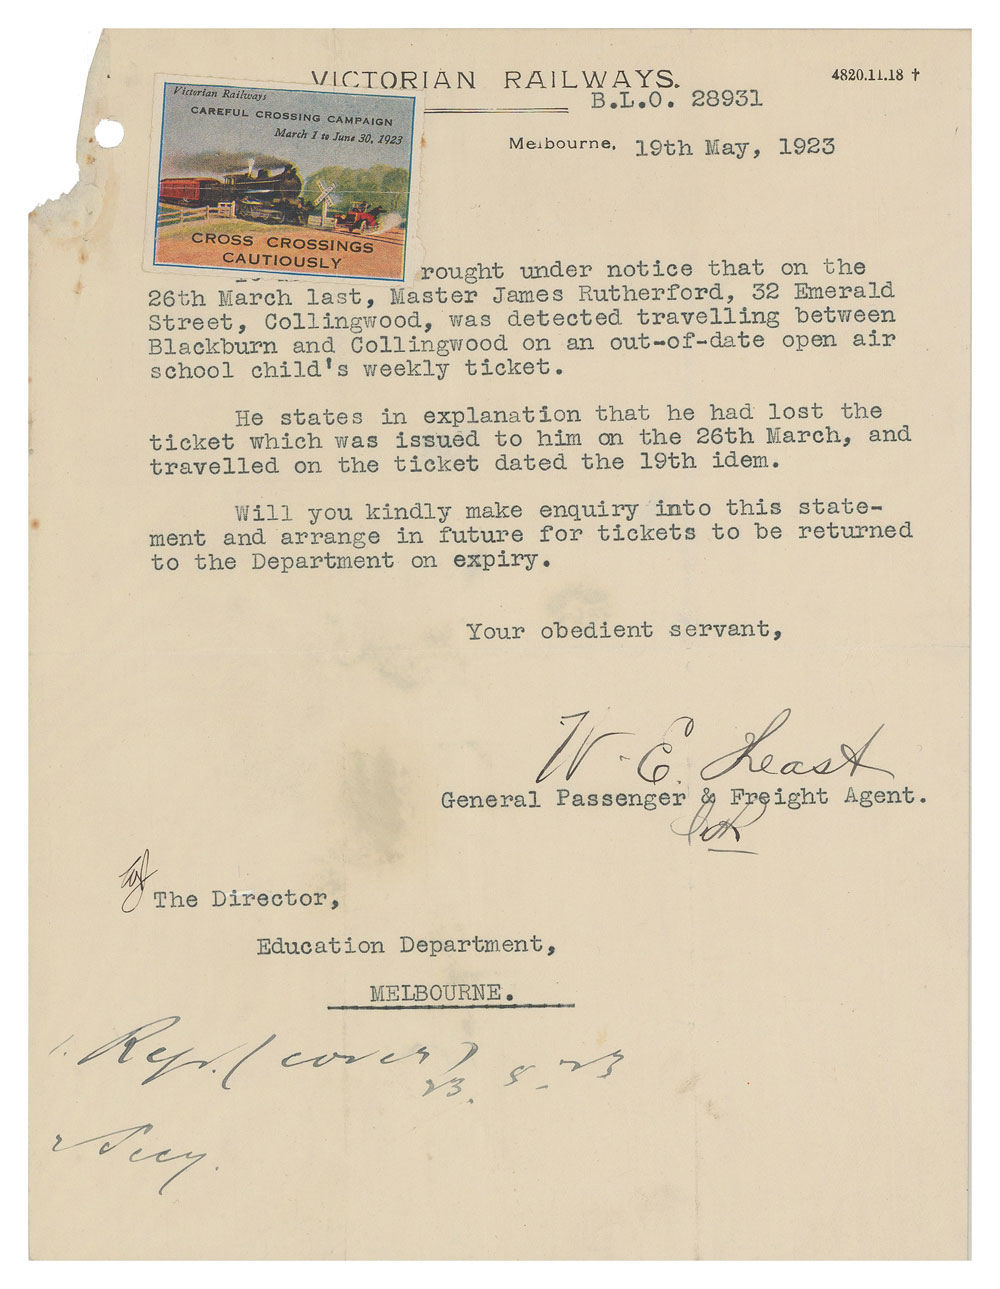 Railway letter